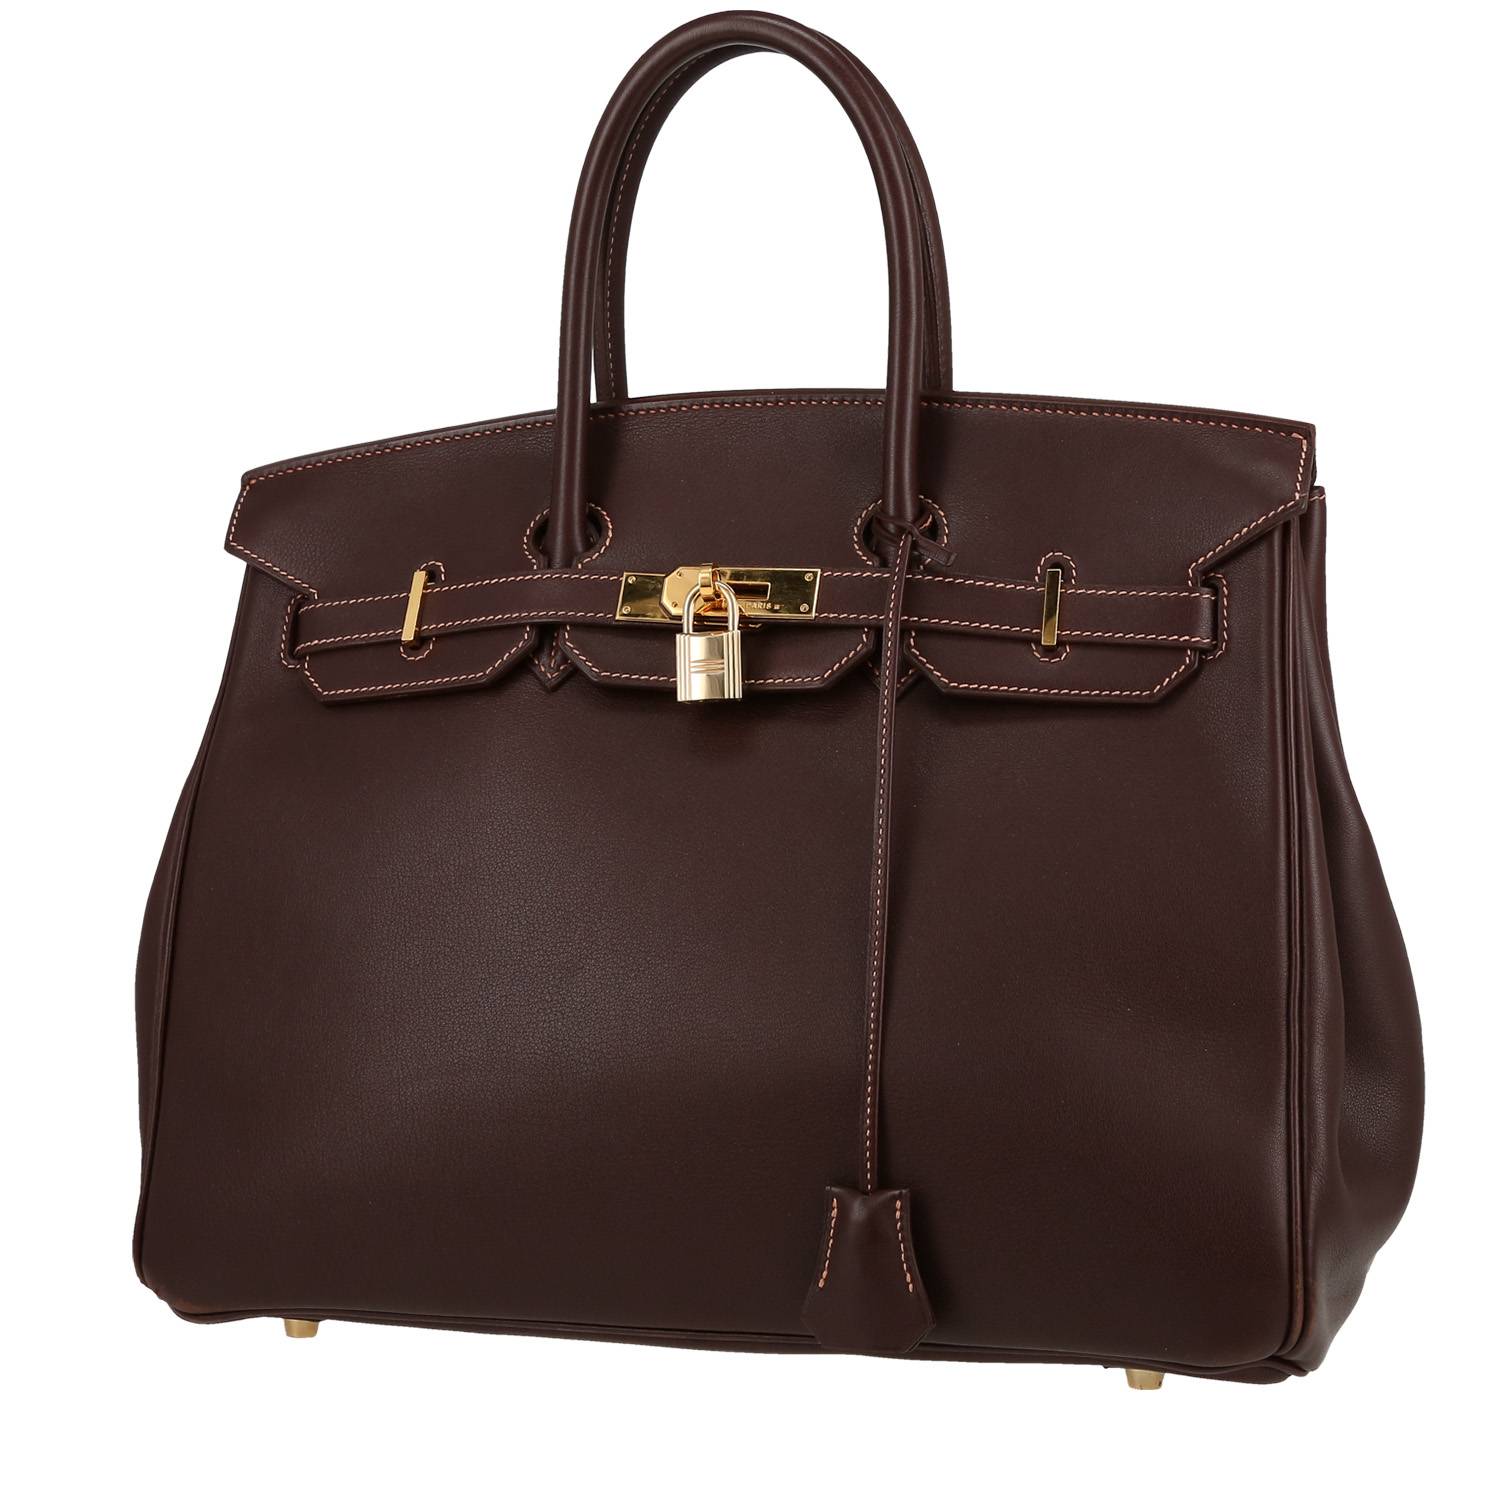 Hermès  Birkin 35 cm handbag  in brown leather - 00pp